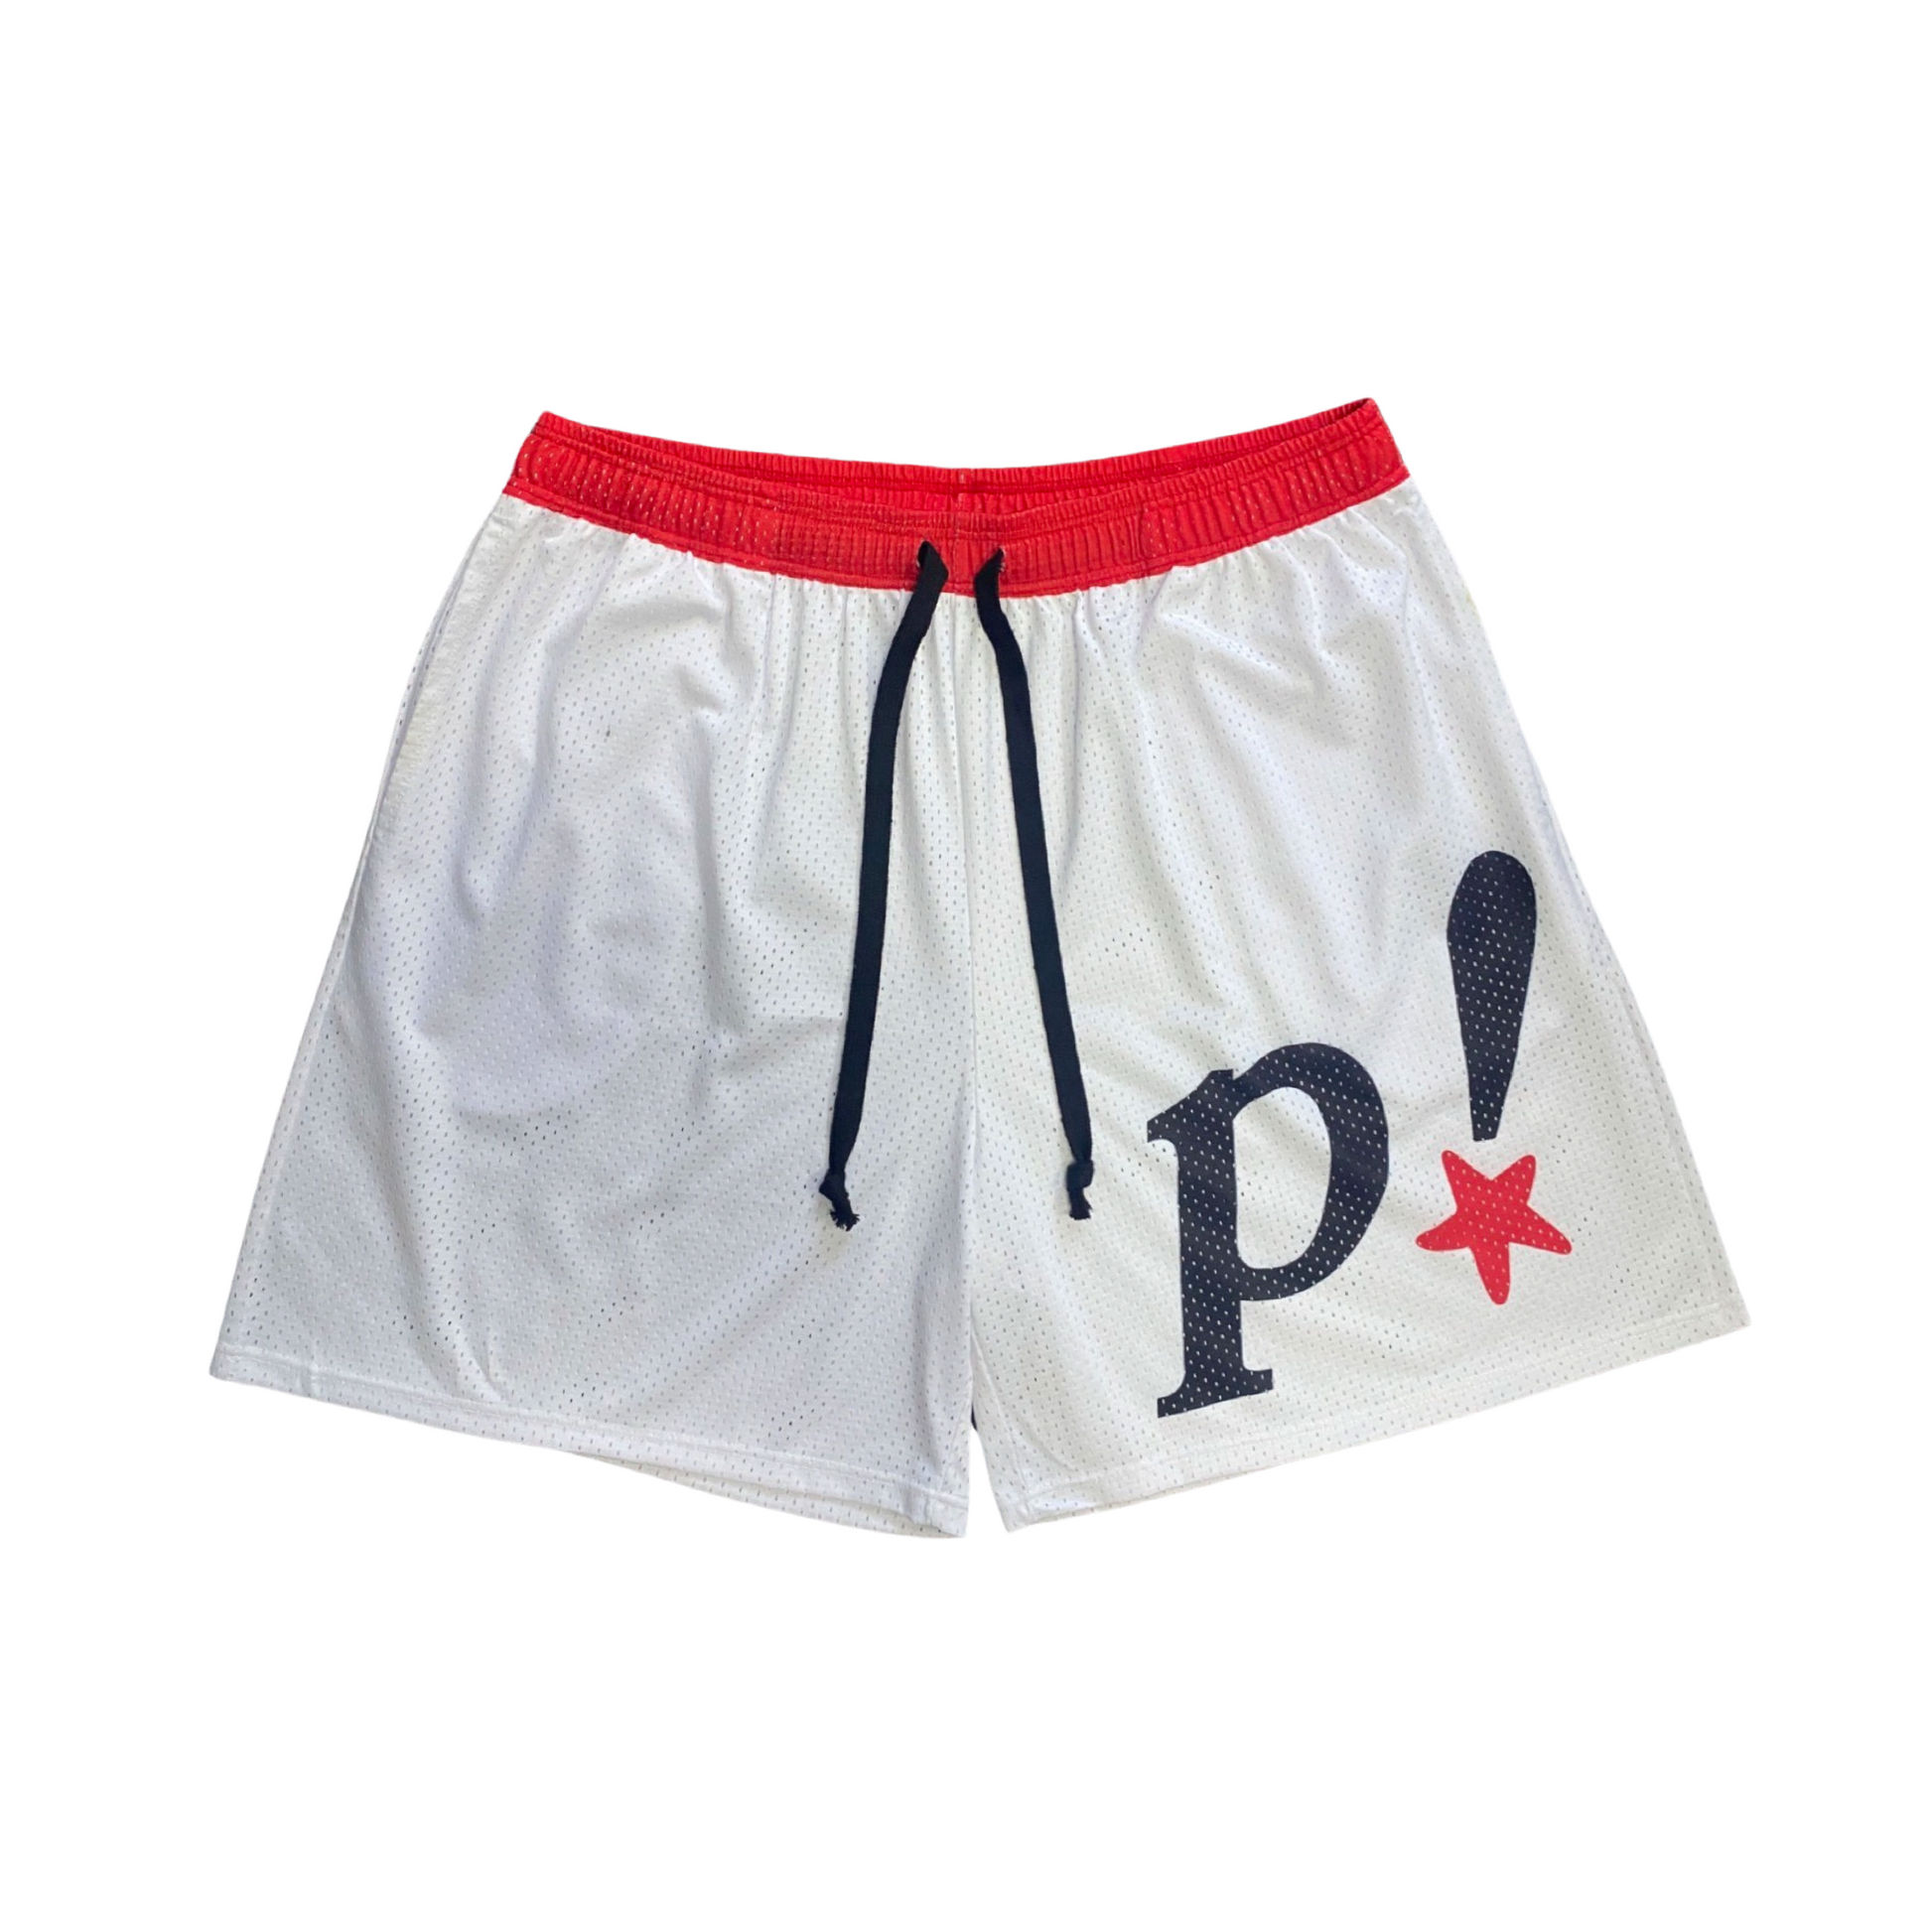 P-STAR (Premise) Branded Mesh Shorts